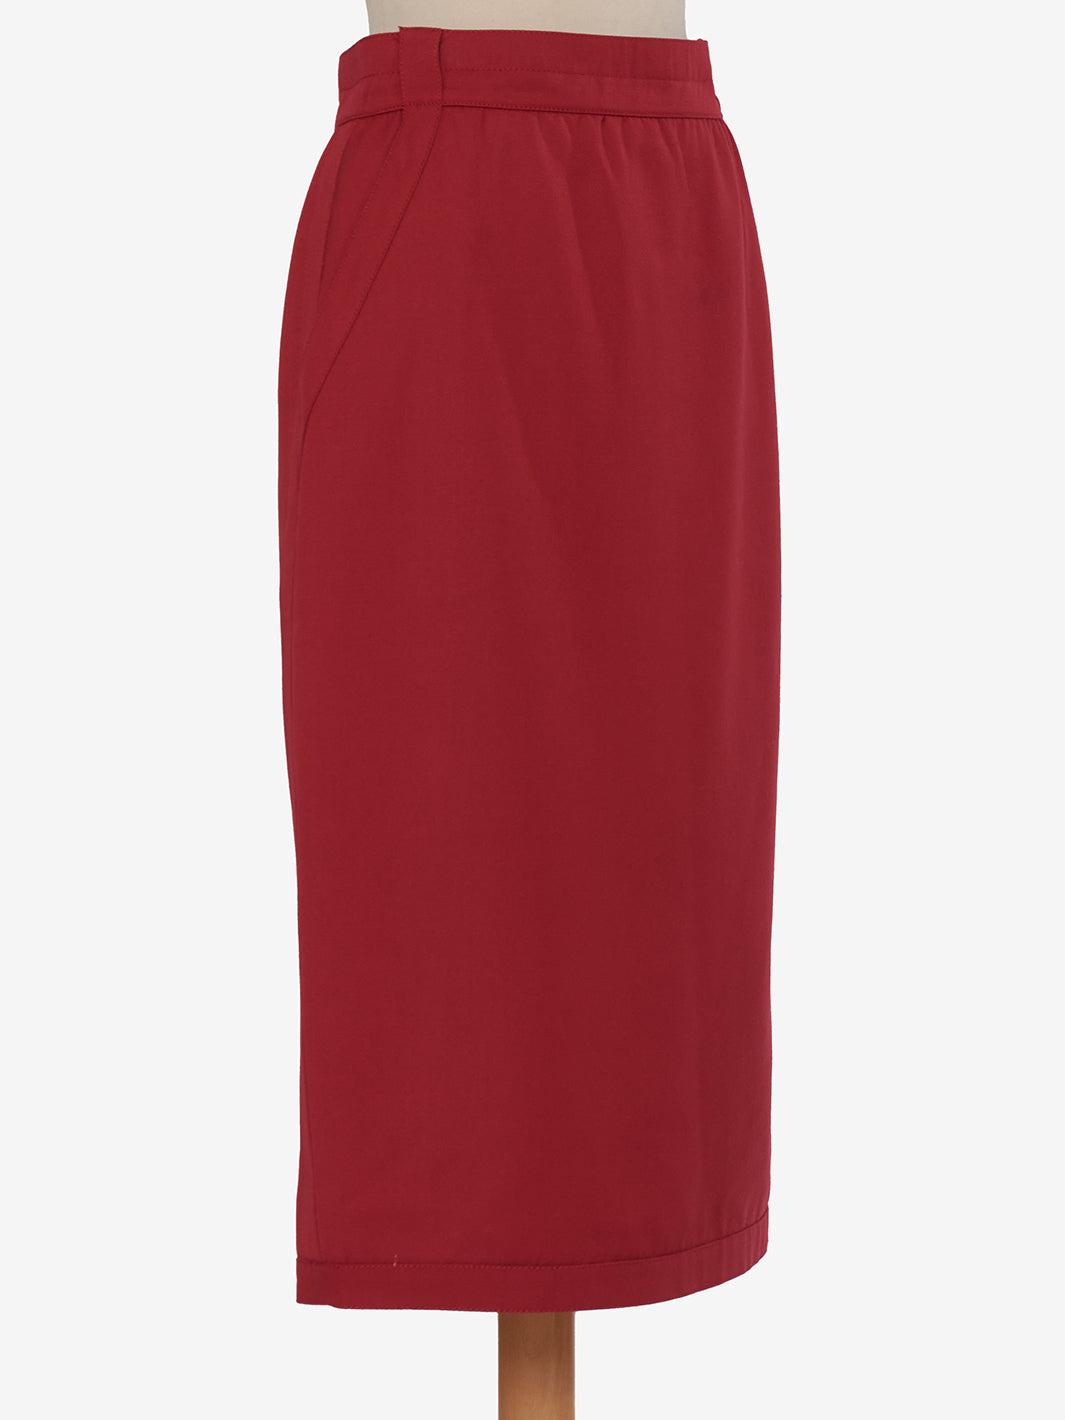 Gianni Versace Red Wool Skirt